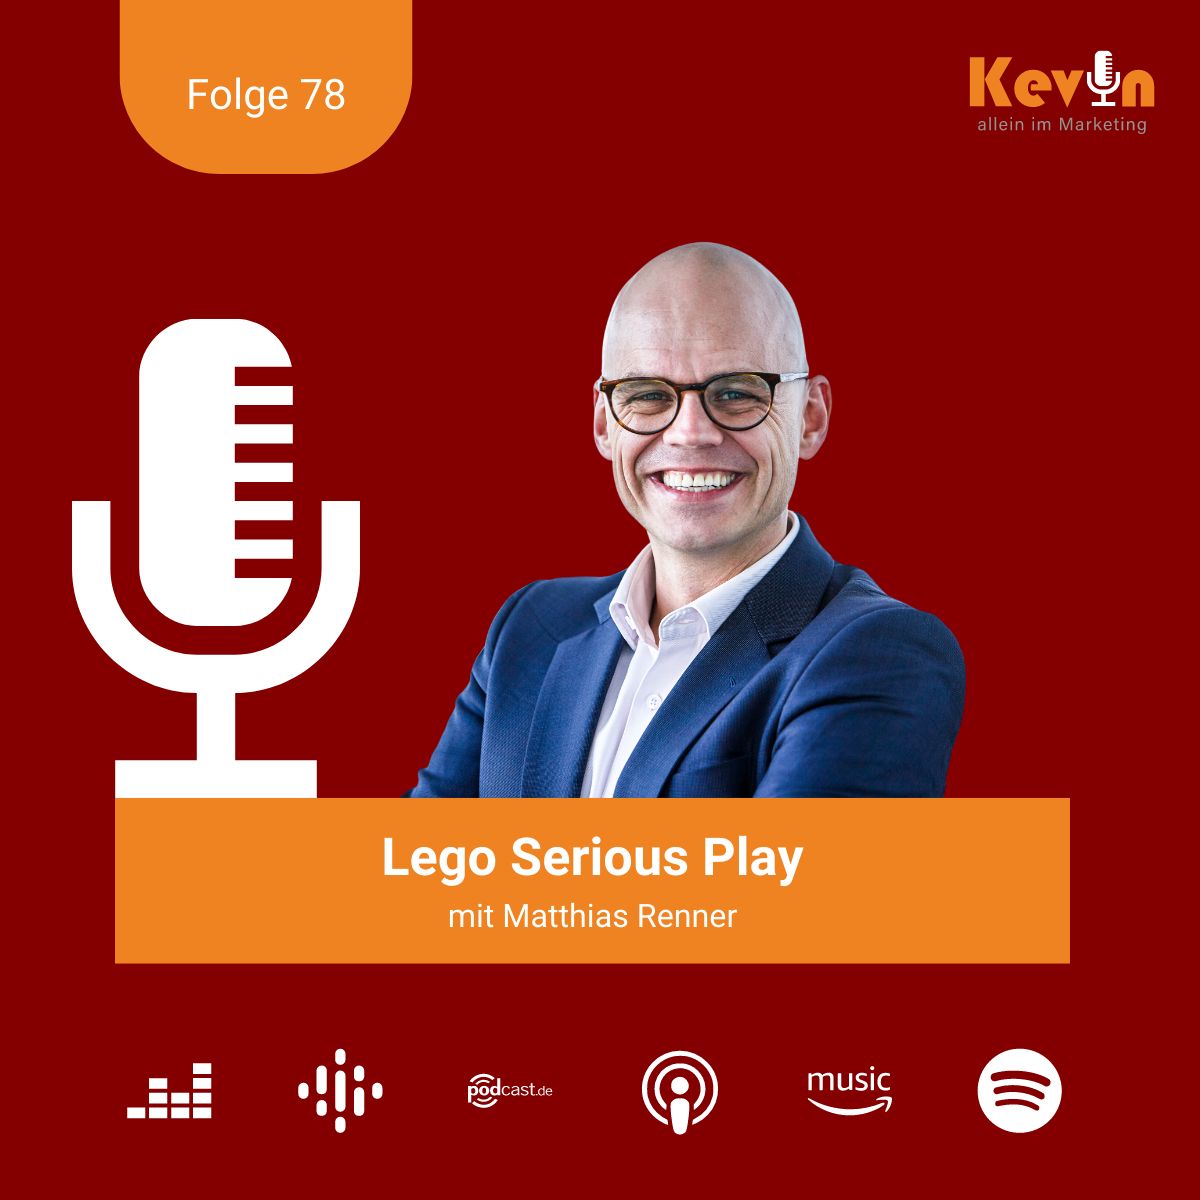 Kecvin allein im Marketing // marketing podcast // LEGO SERIOUS PLAY // Matthias Renner